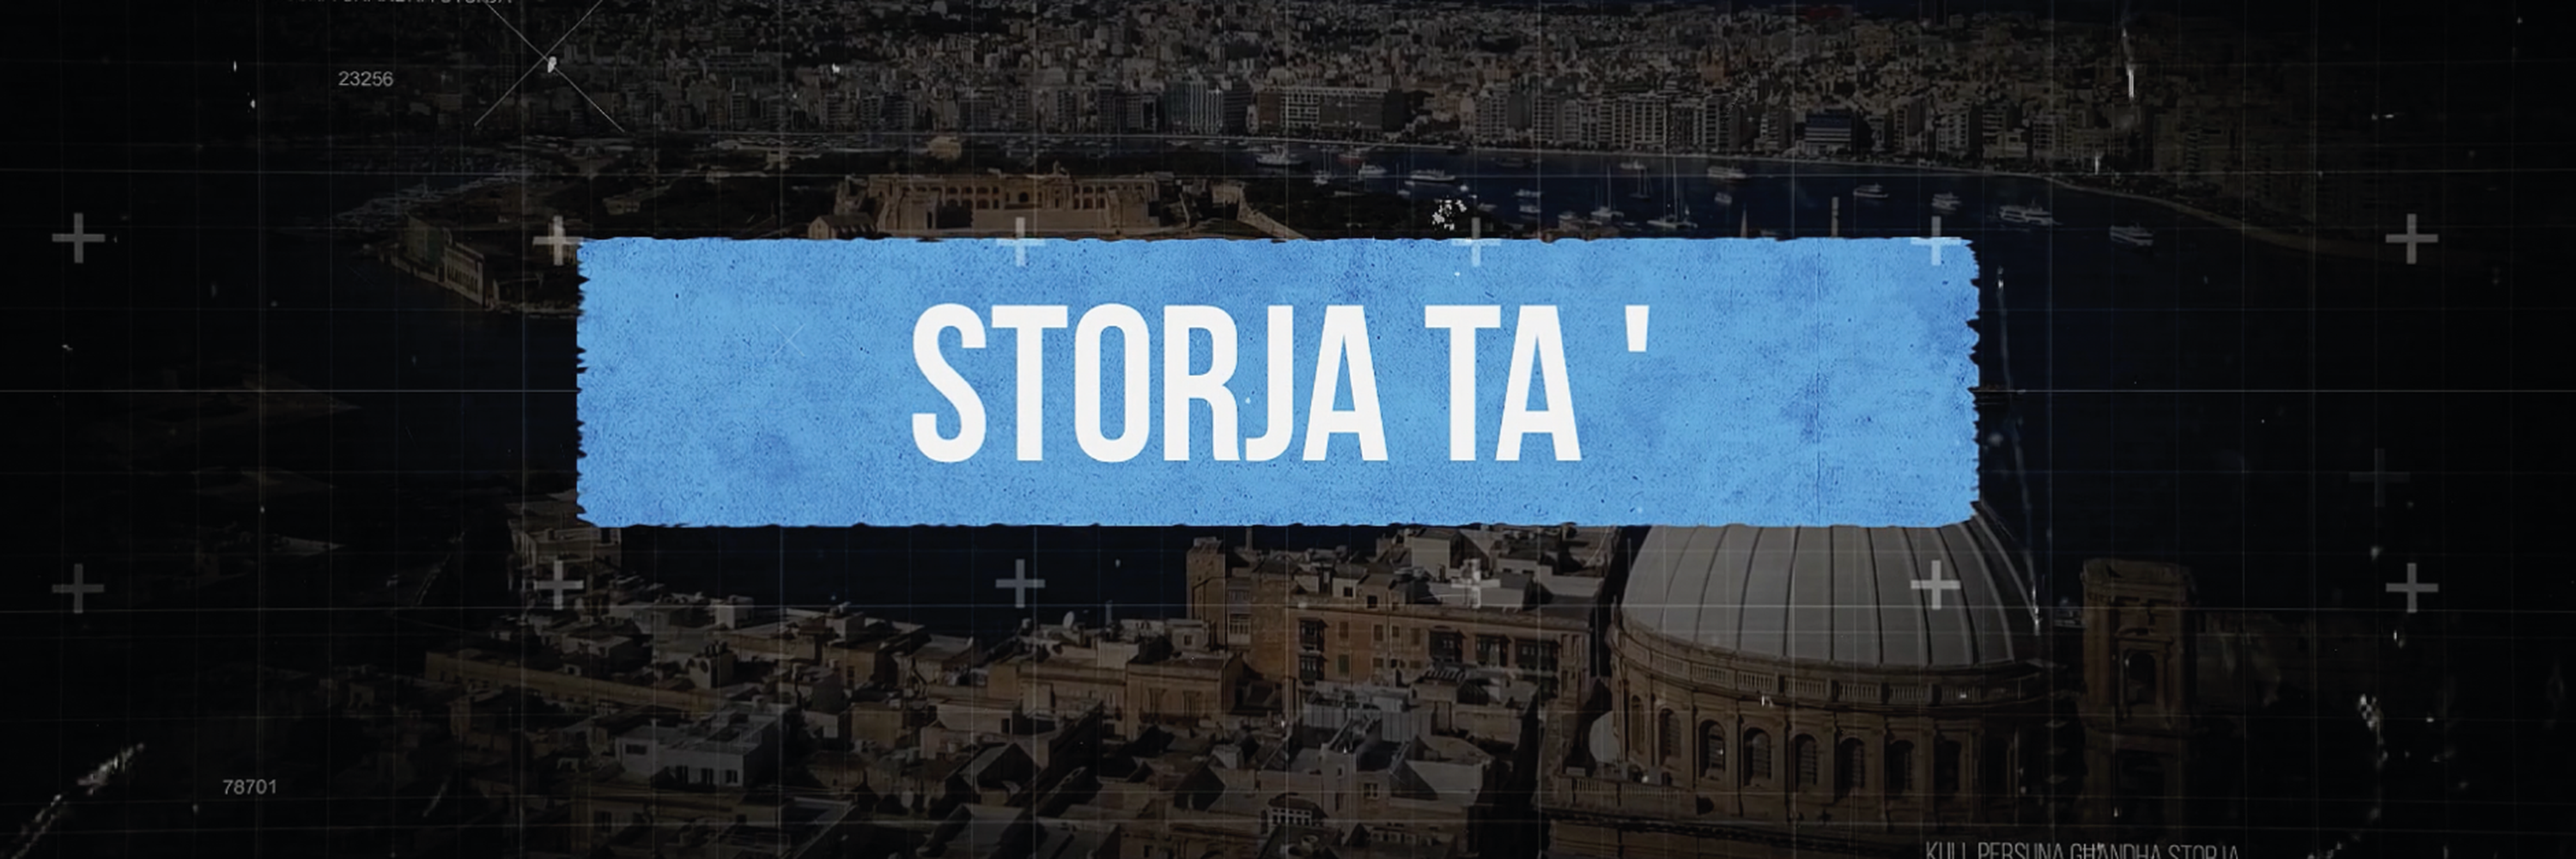 Storja ta' - a new TV documentary series